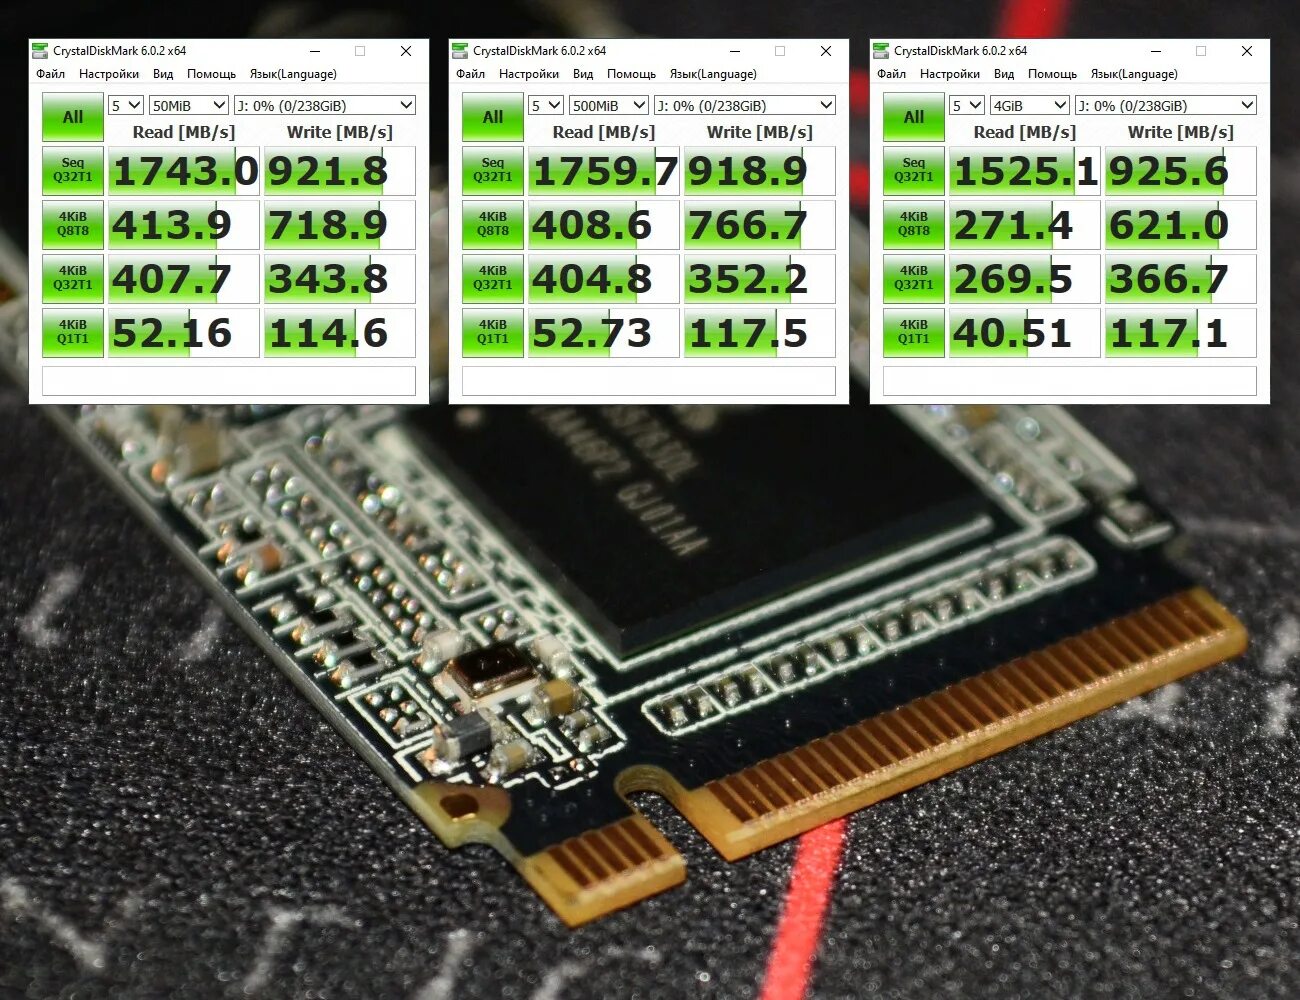 M 2 pcie 5.0. SSD M.2 PCI-E 5.0. Стандарты SSD M.2. Скорость SSD m2. Скорость чтения SSD m2 3 PCI-E.